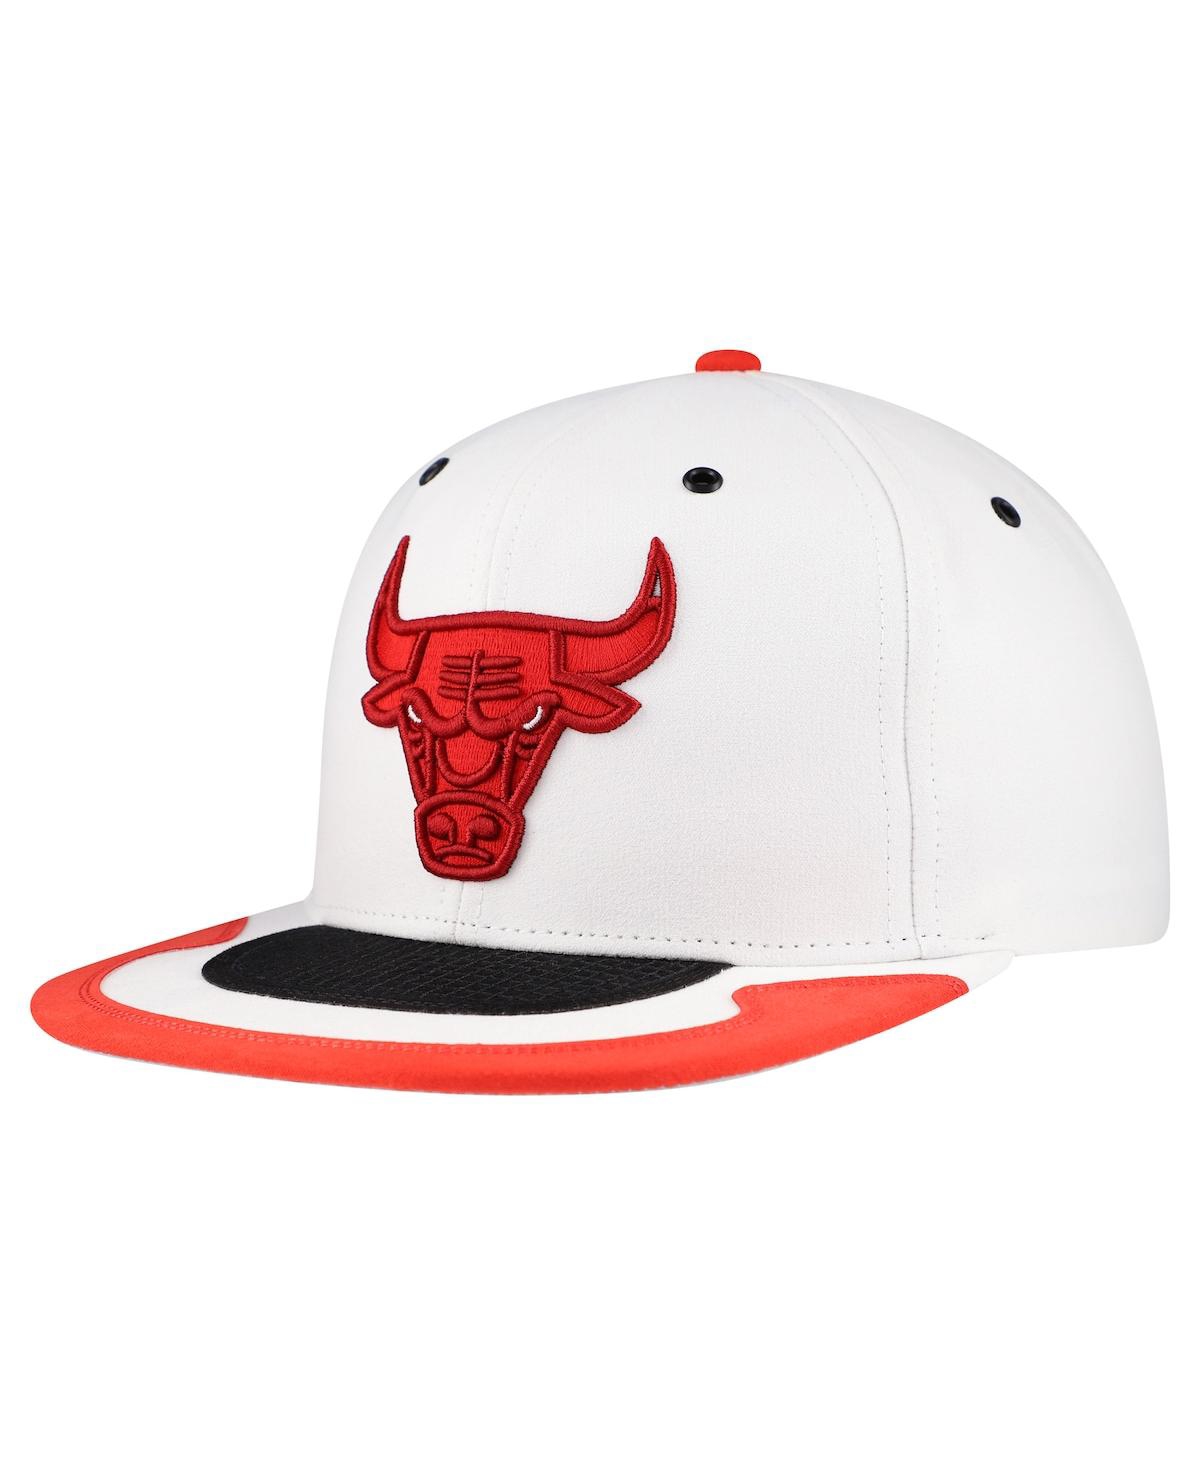 Mitchell Ness Men's White Chicago Bulls Day 4 Snapback Hat - White Red